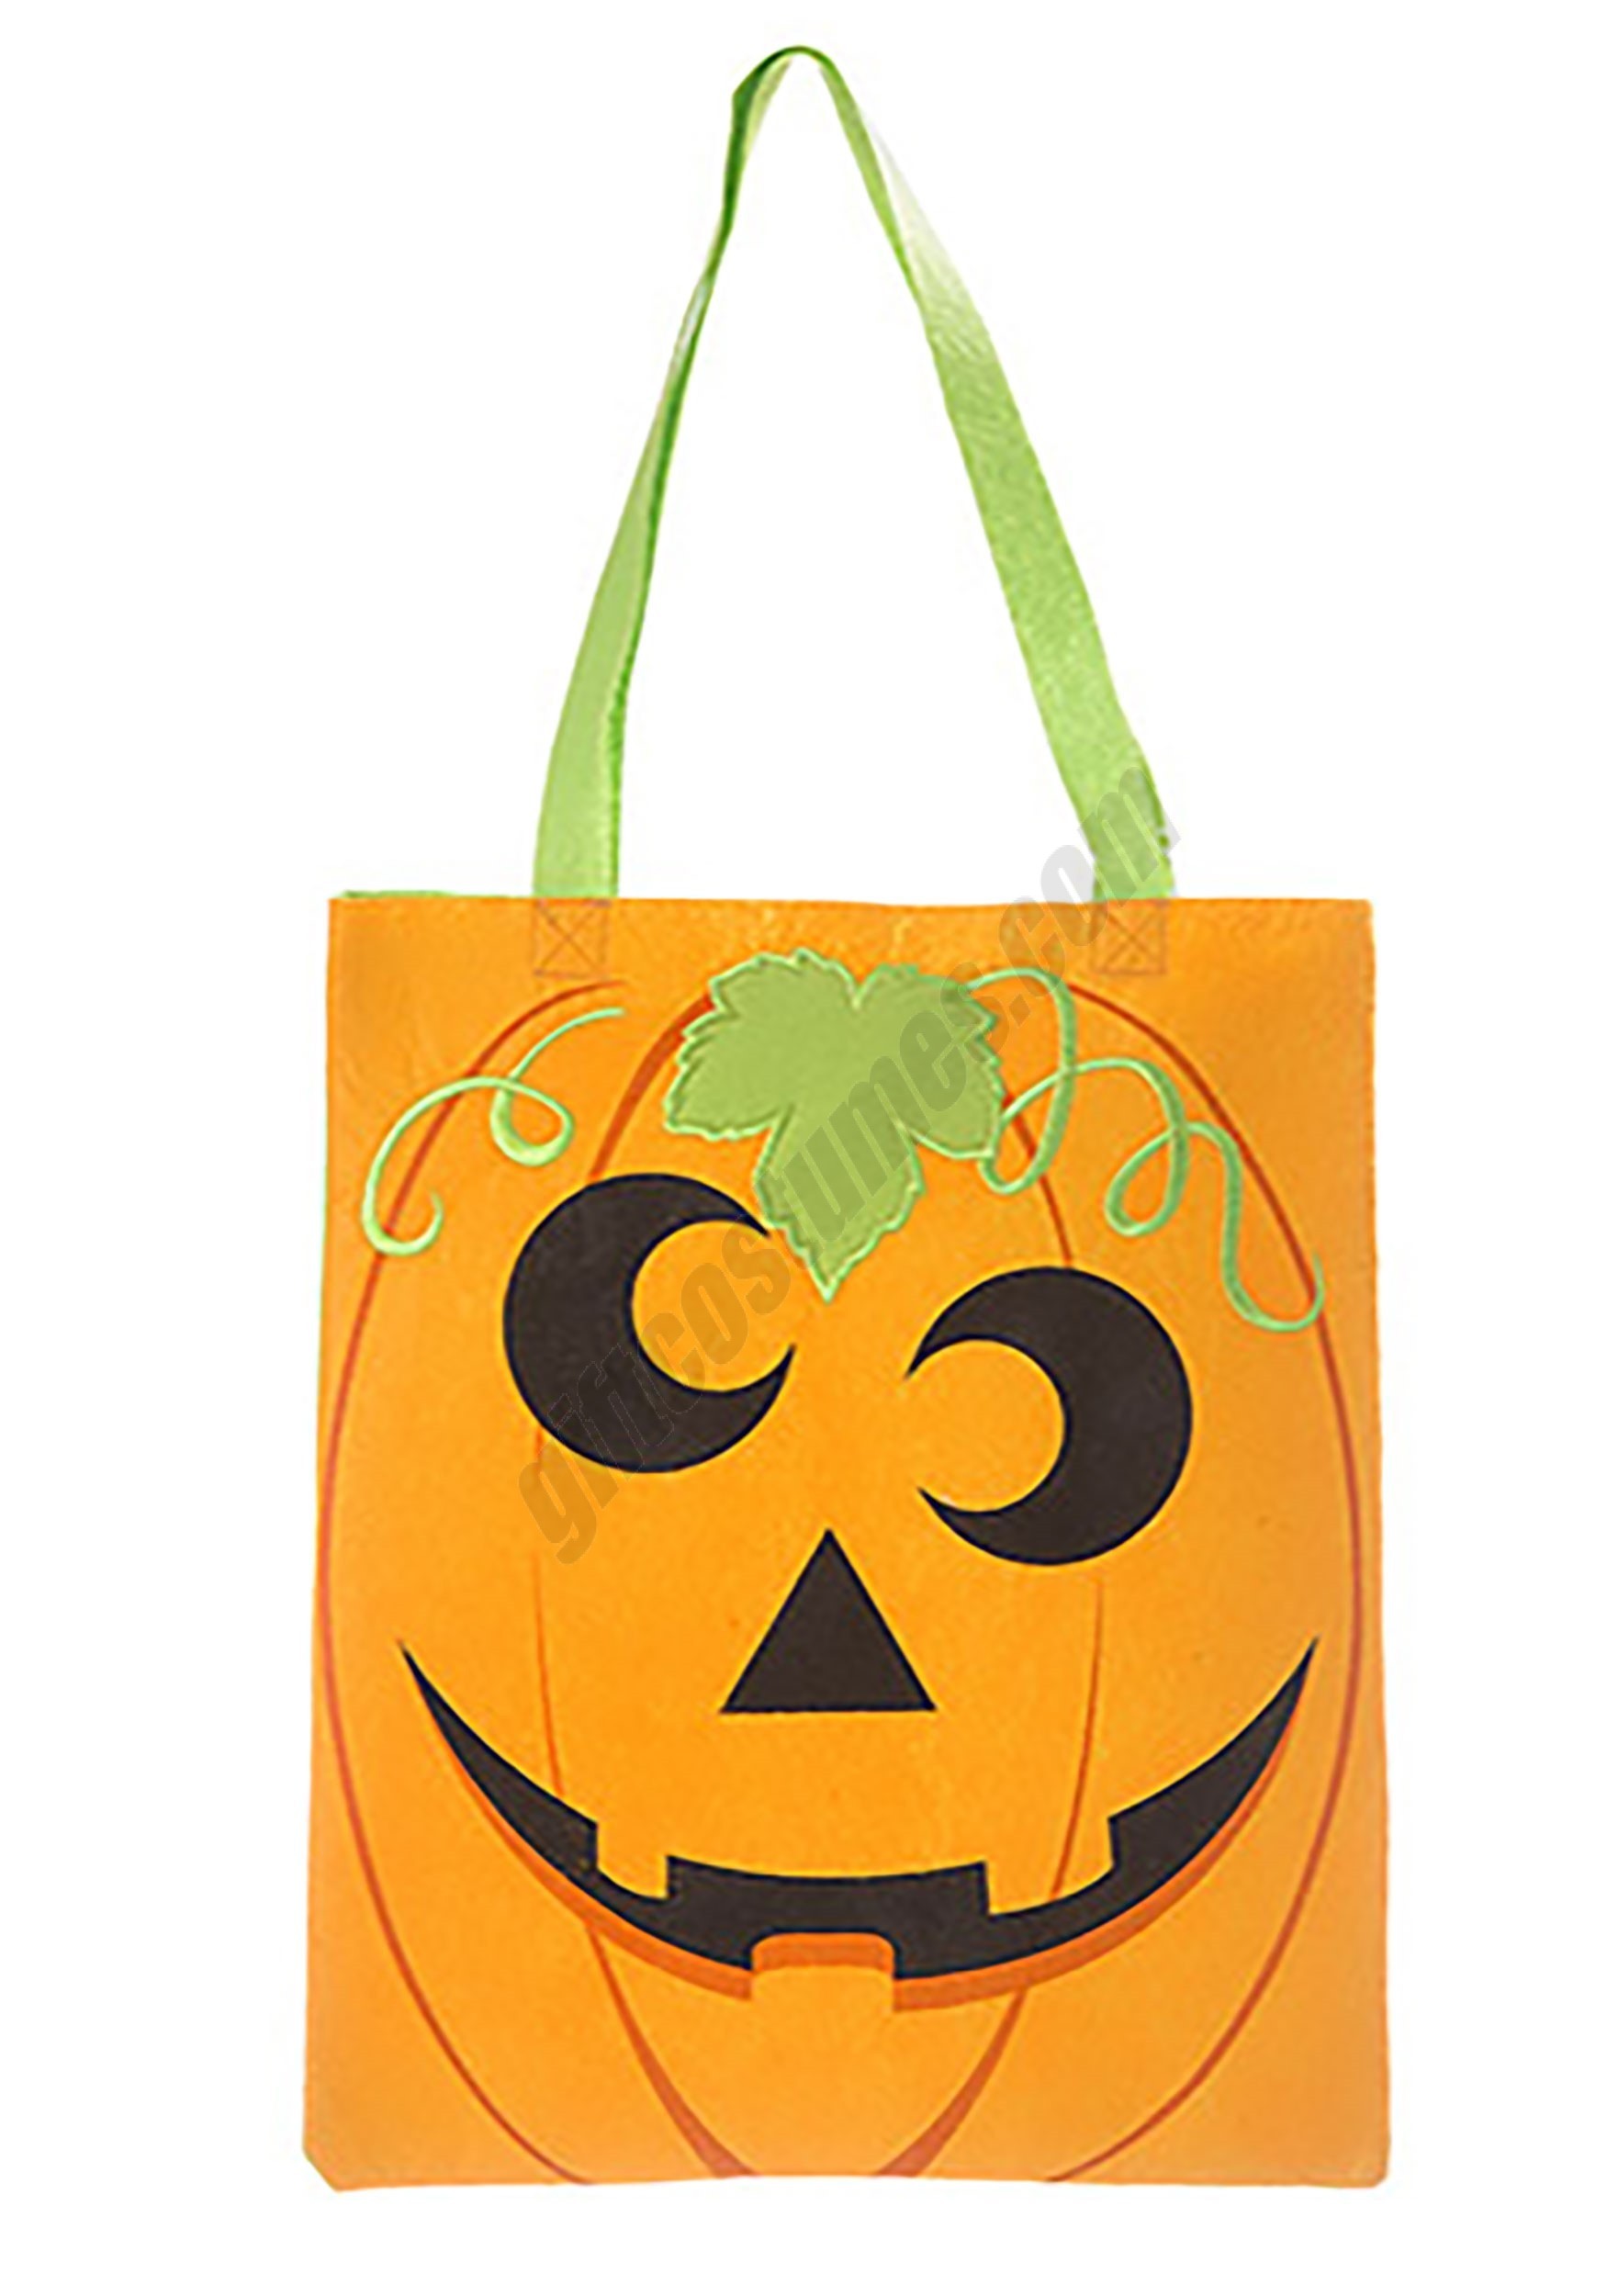 Pumpkin Tote Bag Promotions - Pumpkin Tote Bag Promotions